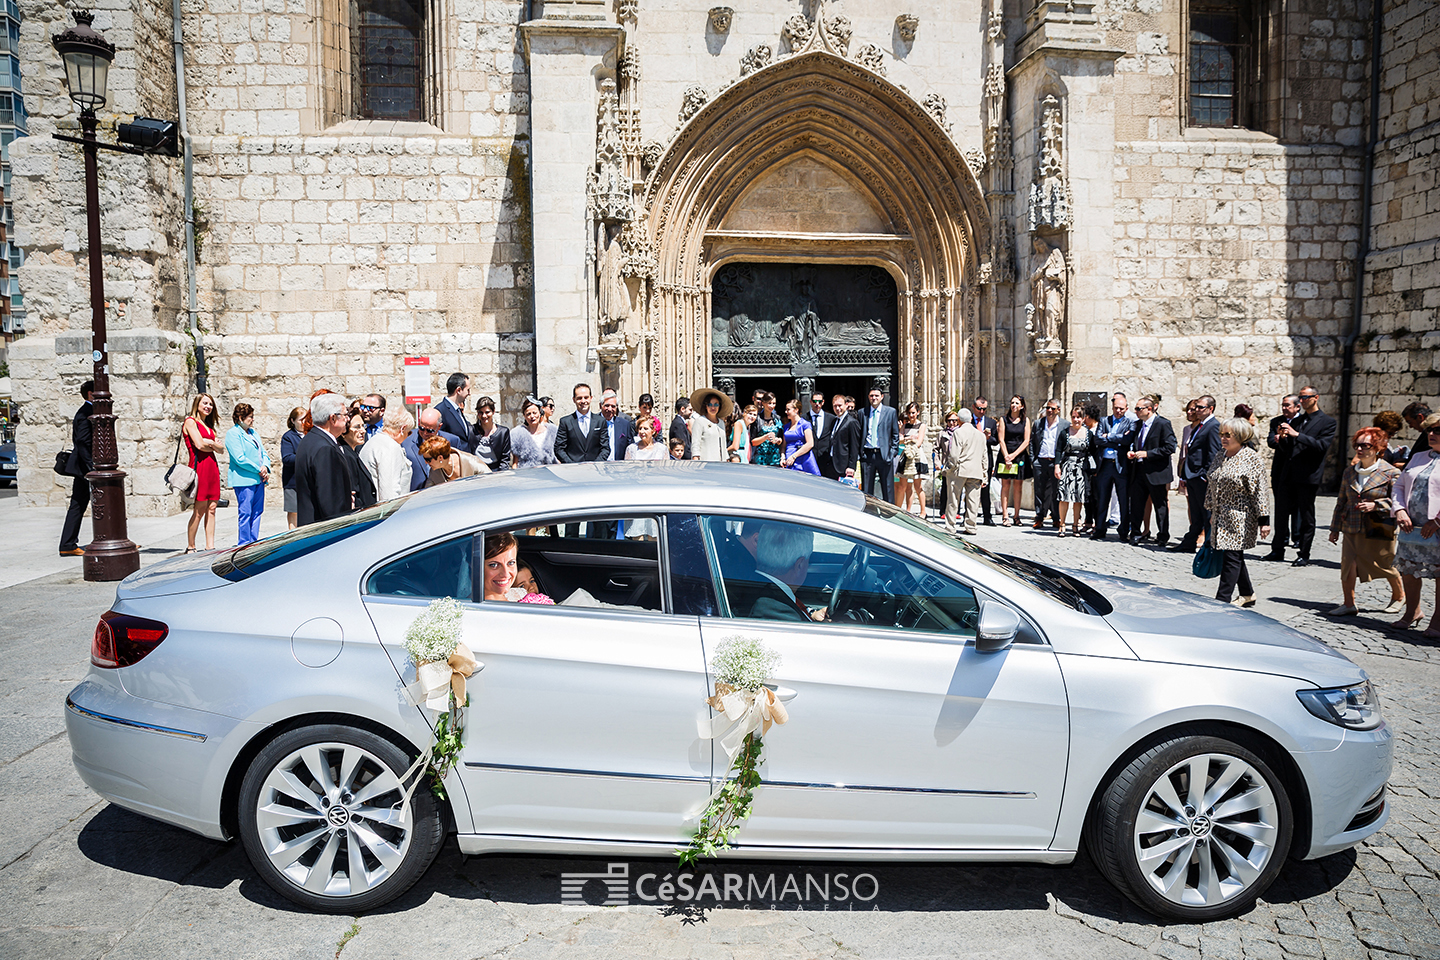 César Manso Fotógrafo: Fotógrafos de boda en Burgos - Boda%20AlejandrayJairo-15.JPG